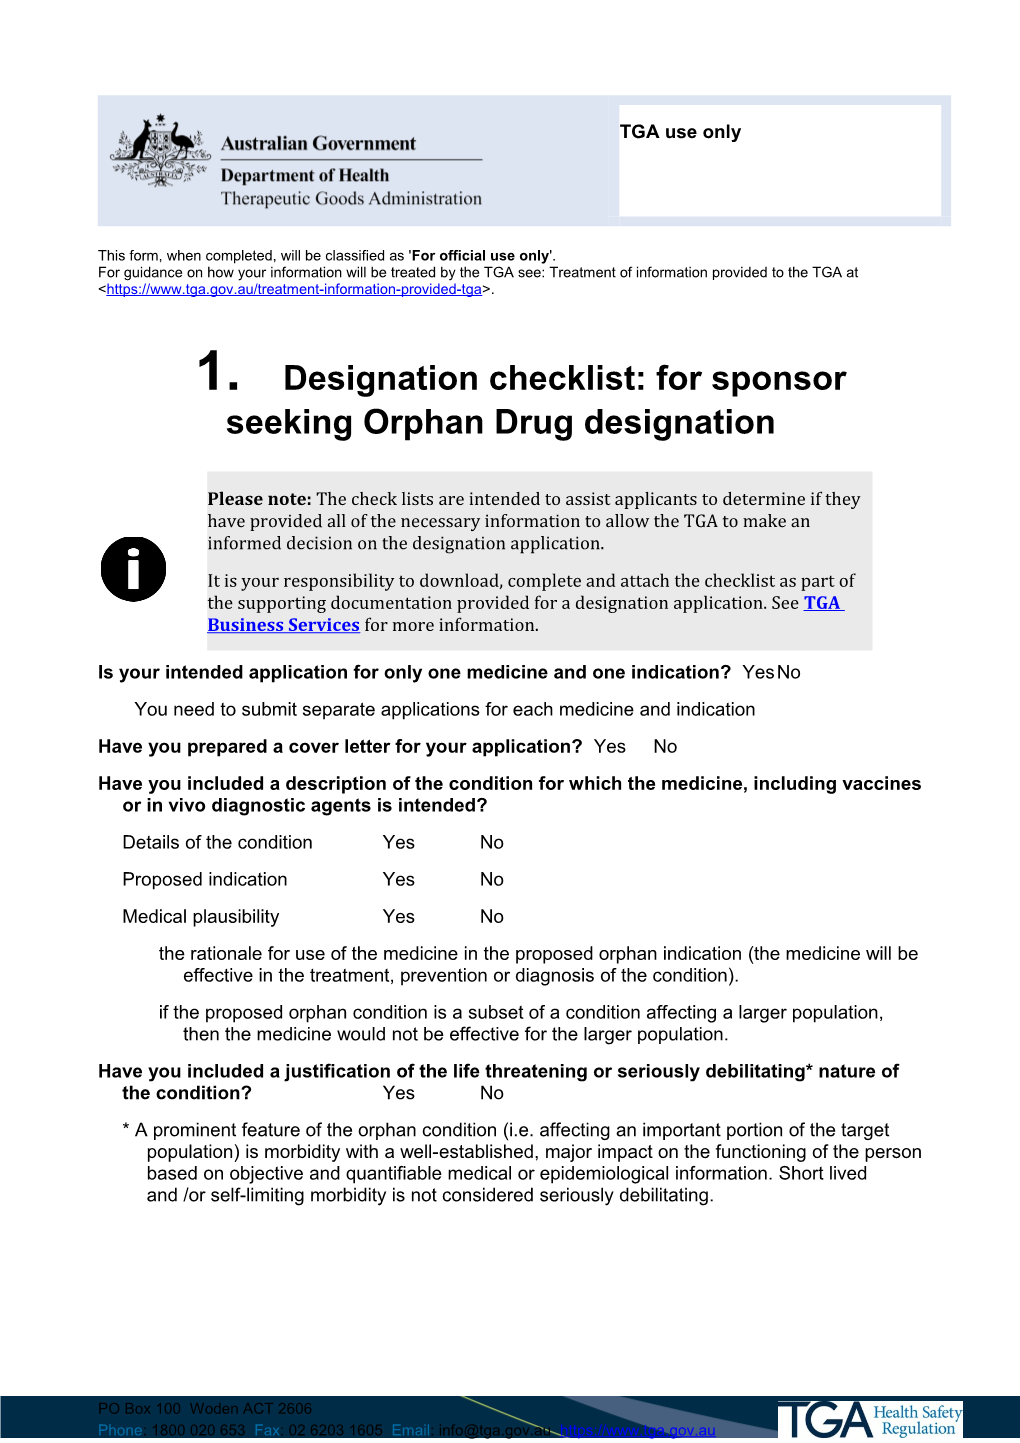 Designation Checklist: for Sponsor Seeking Orphan Drug Designation